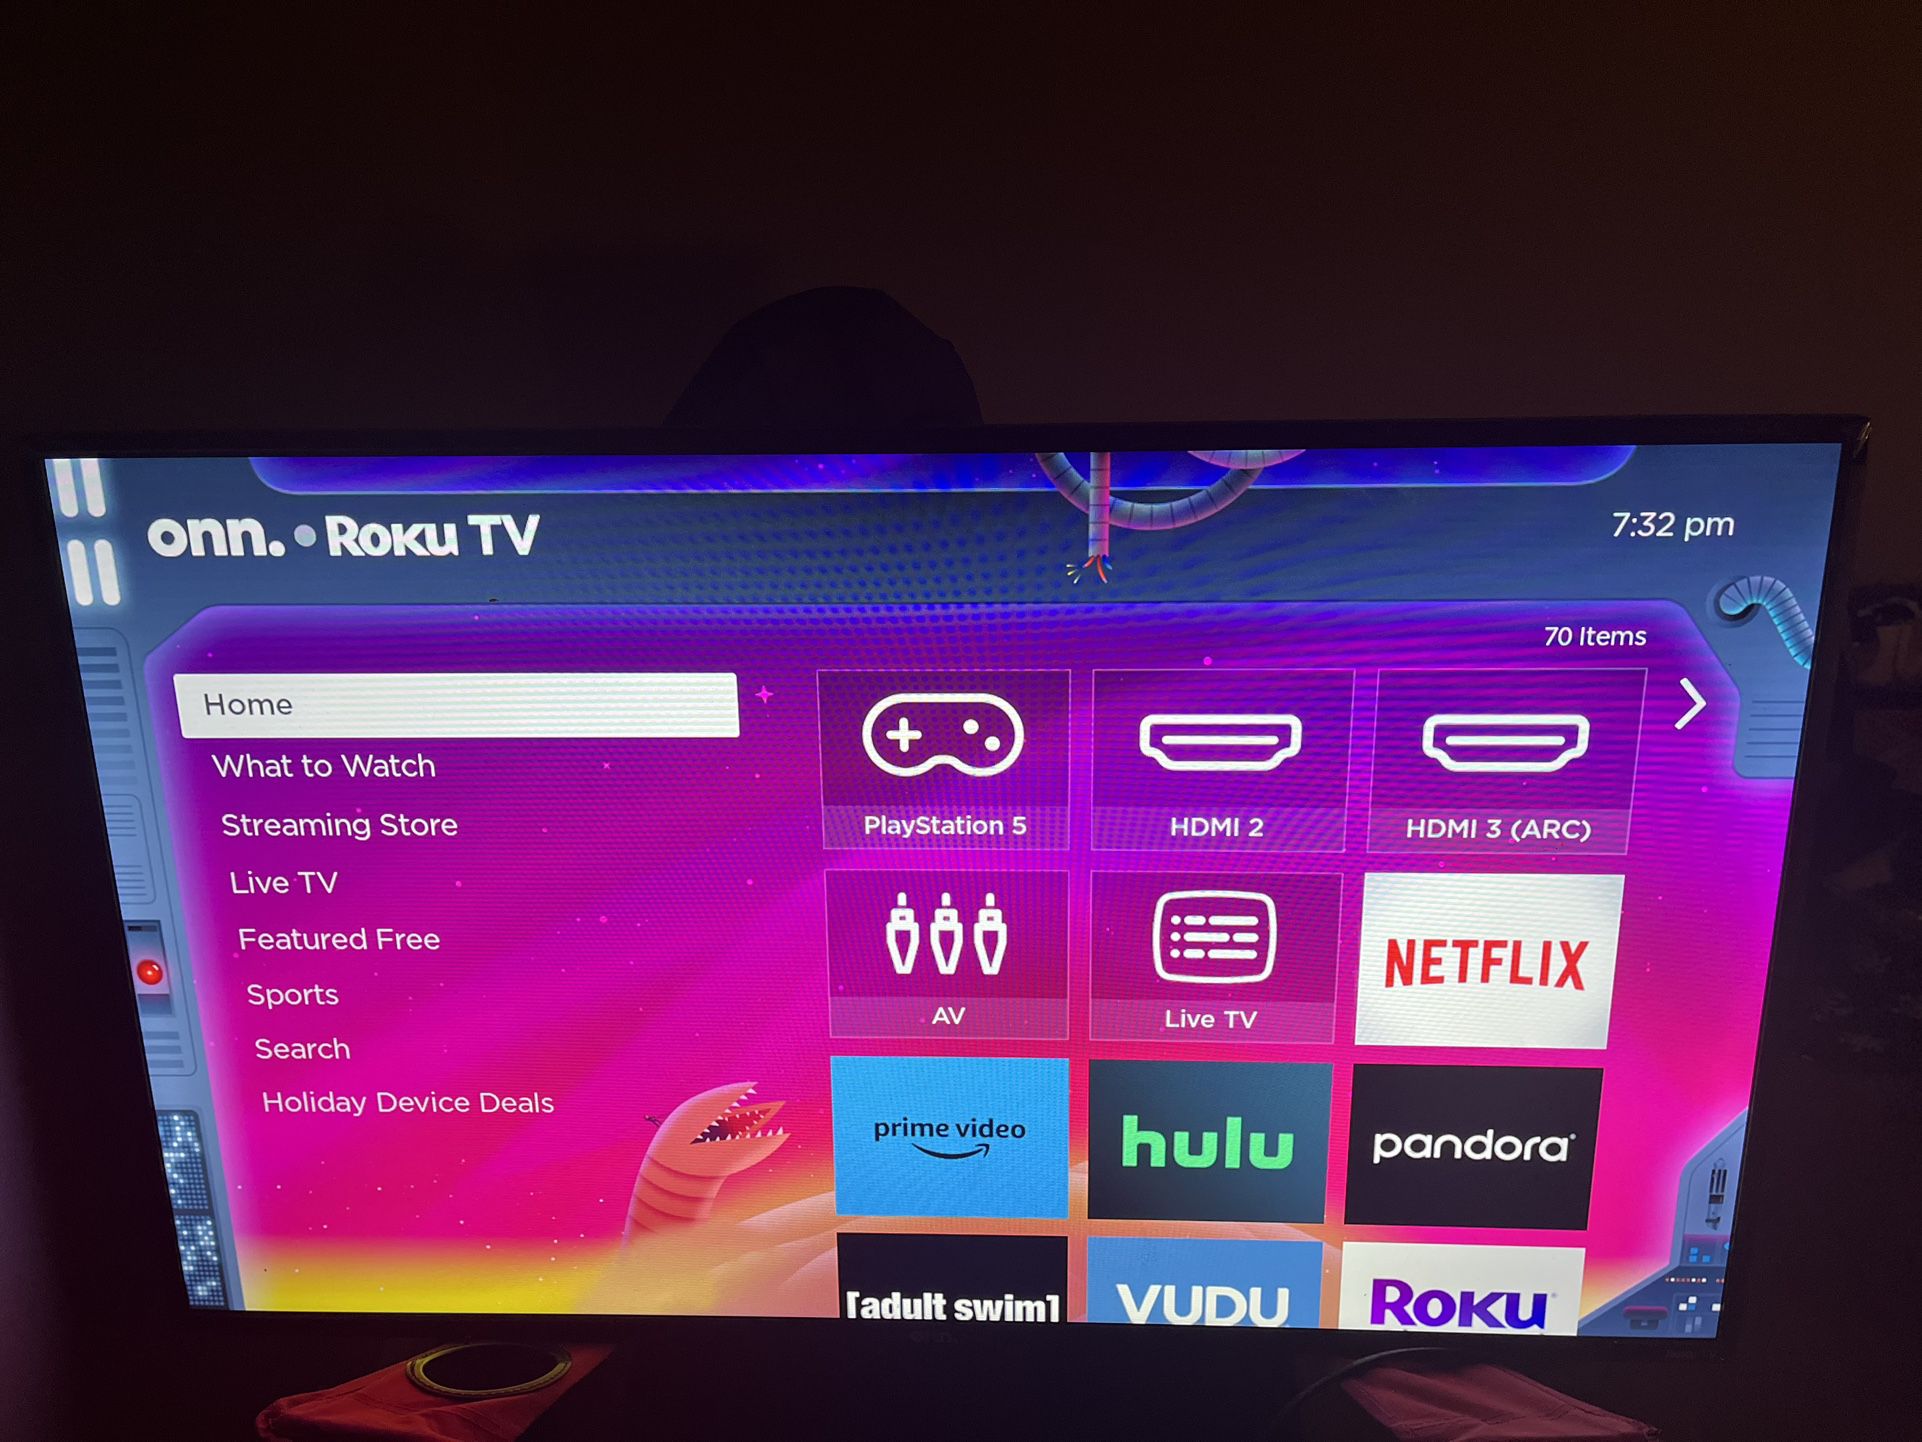 65’tv Roku Comes With Remote